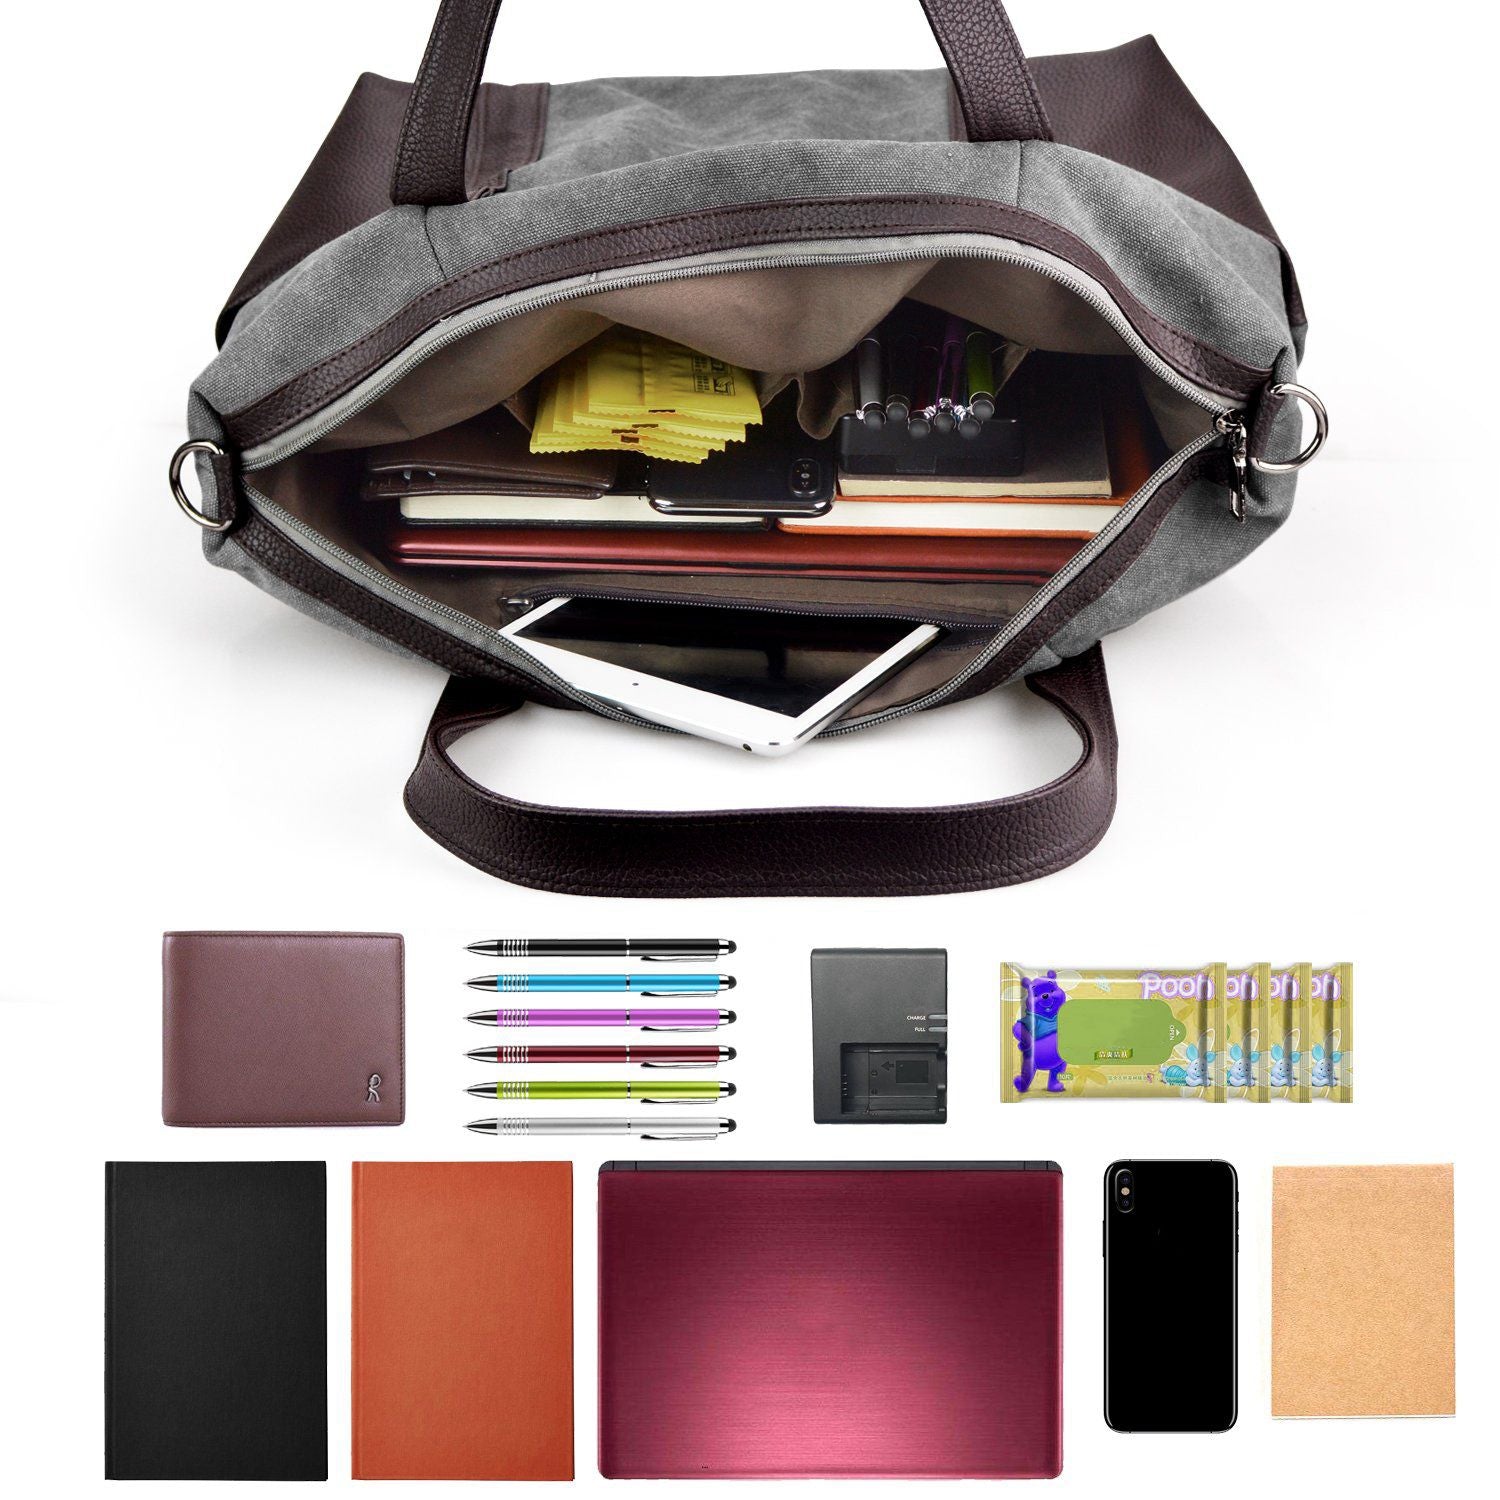 Canvas Handbags Crossbody Bags For Women Tote Bags Shoulder Bag Hobo Purse Handle Handbags - ebowsos